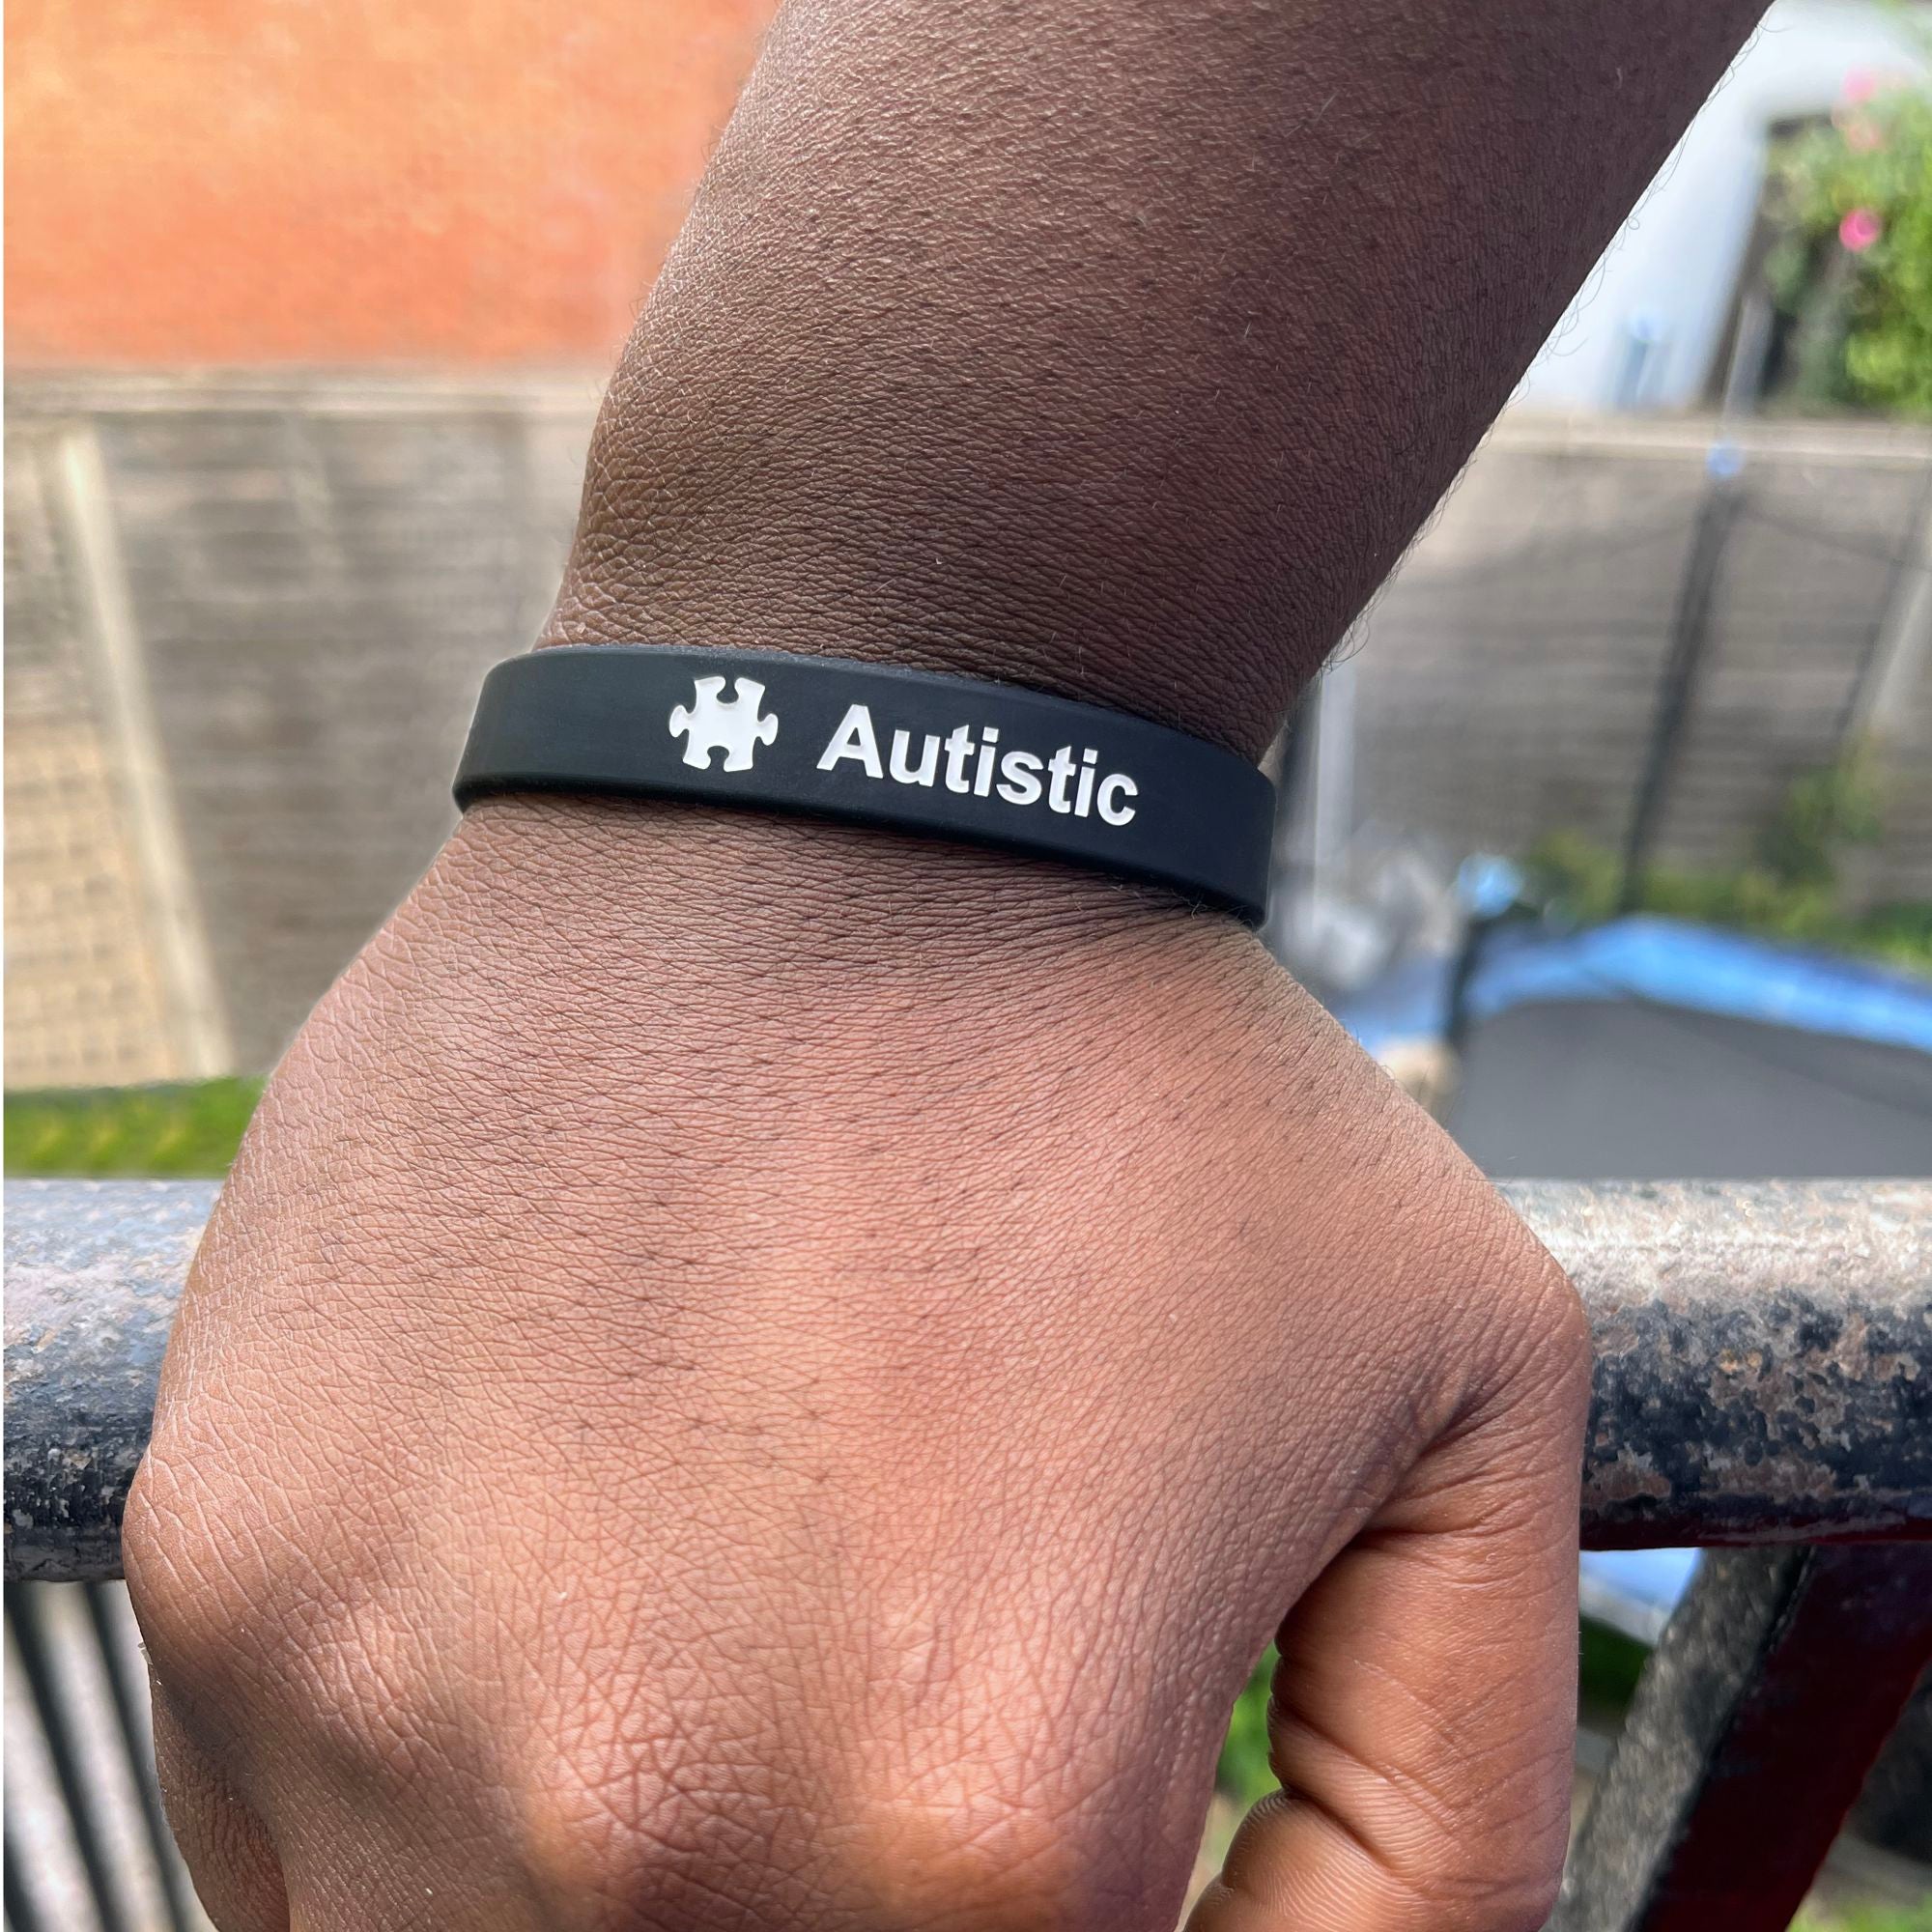 Buy Autism ID Bracelet, Child ID Bracelet, Kids ID Bracelet If Lost, Kids  Safety Bracelet, Autism Bracelet Kids Puzzle Online in India - Etsy